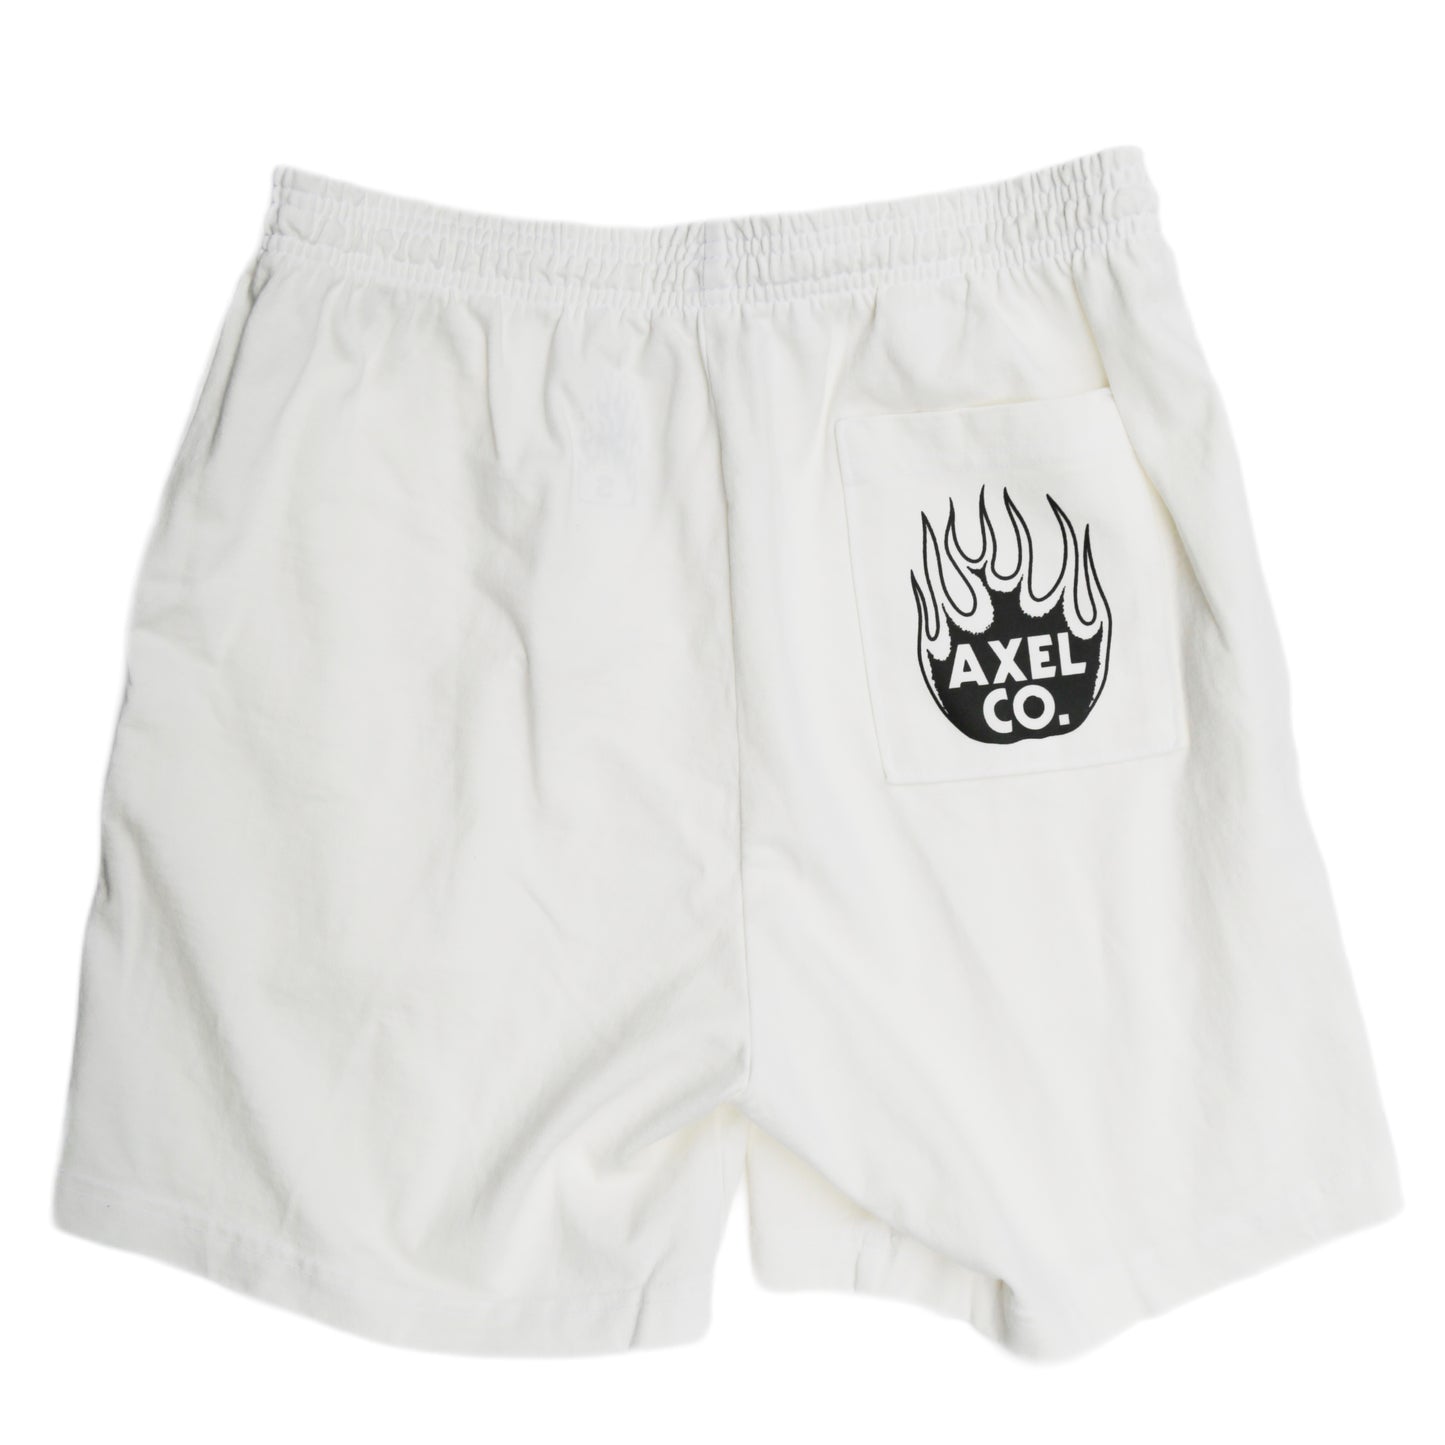 Axel Co White Comfy Shorts